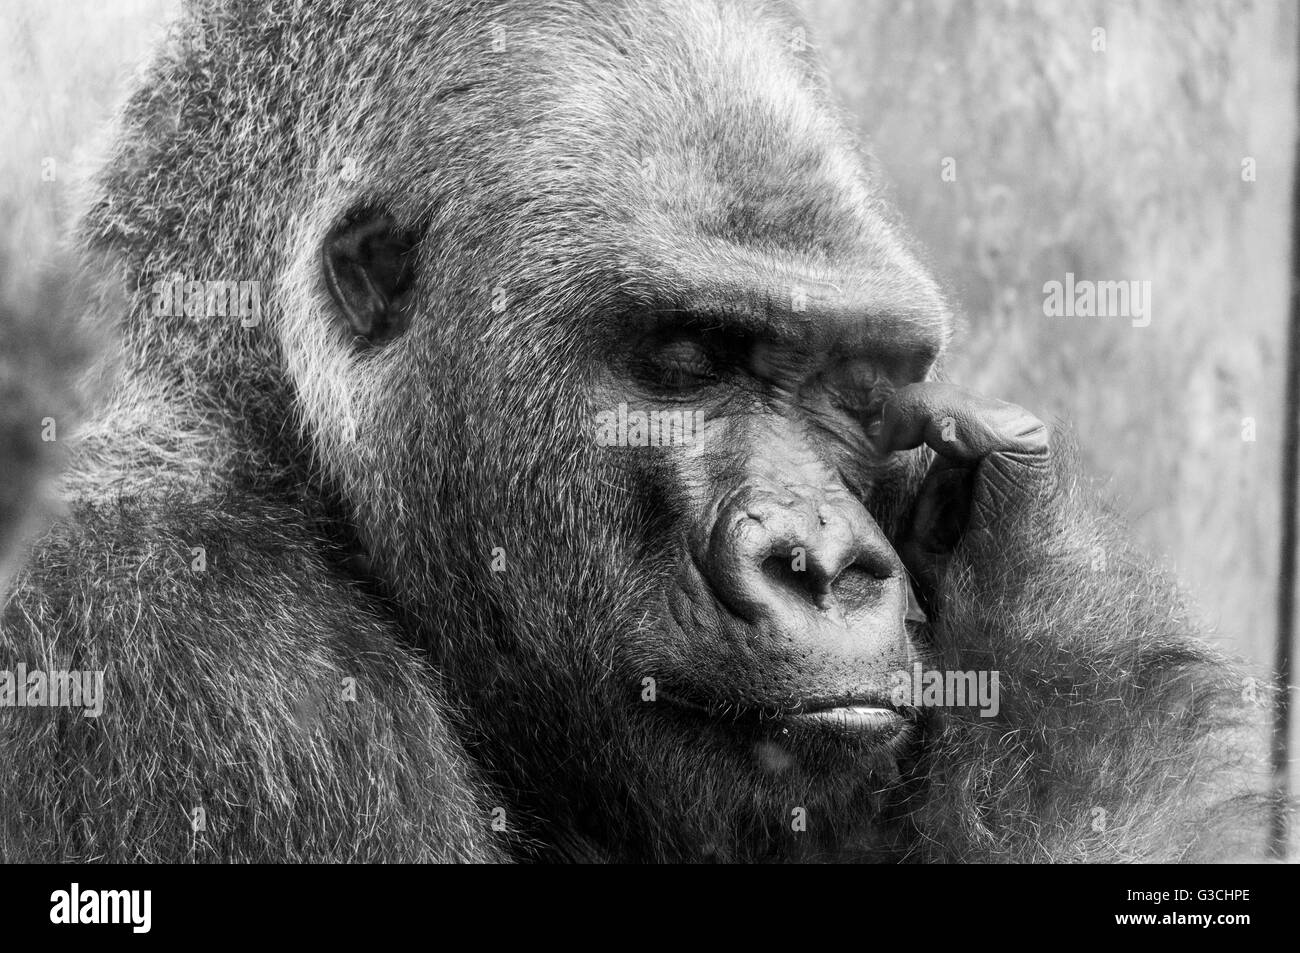 Pensive gorilla Stock Photo